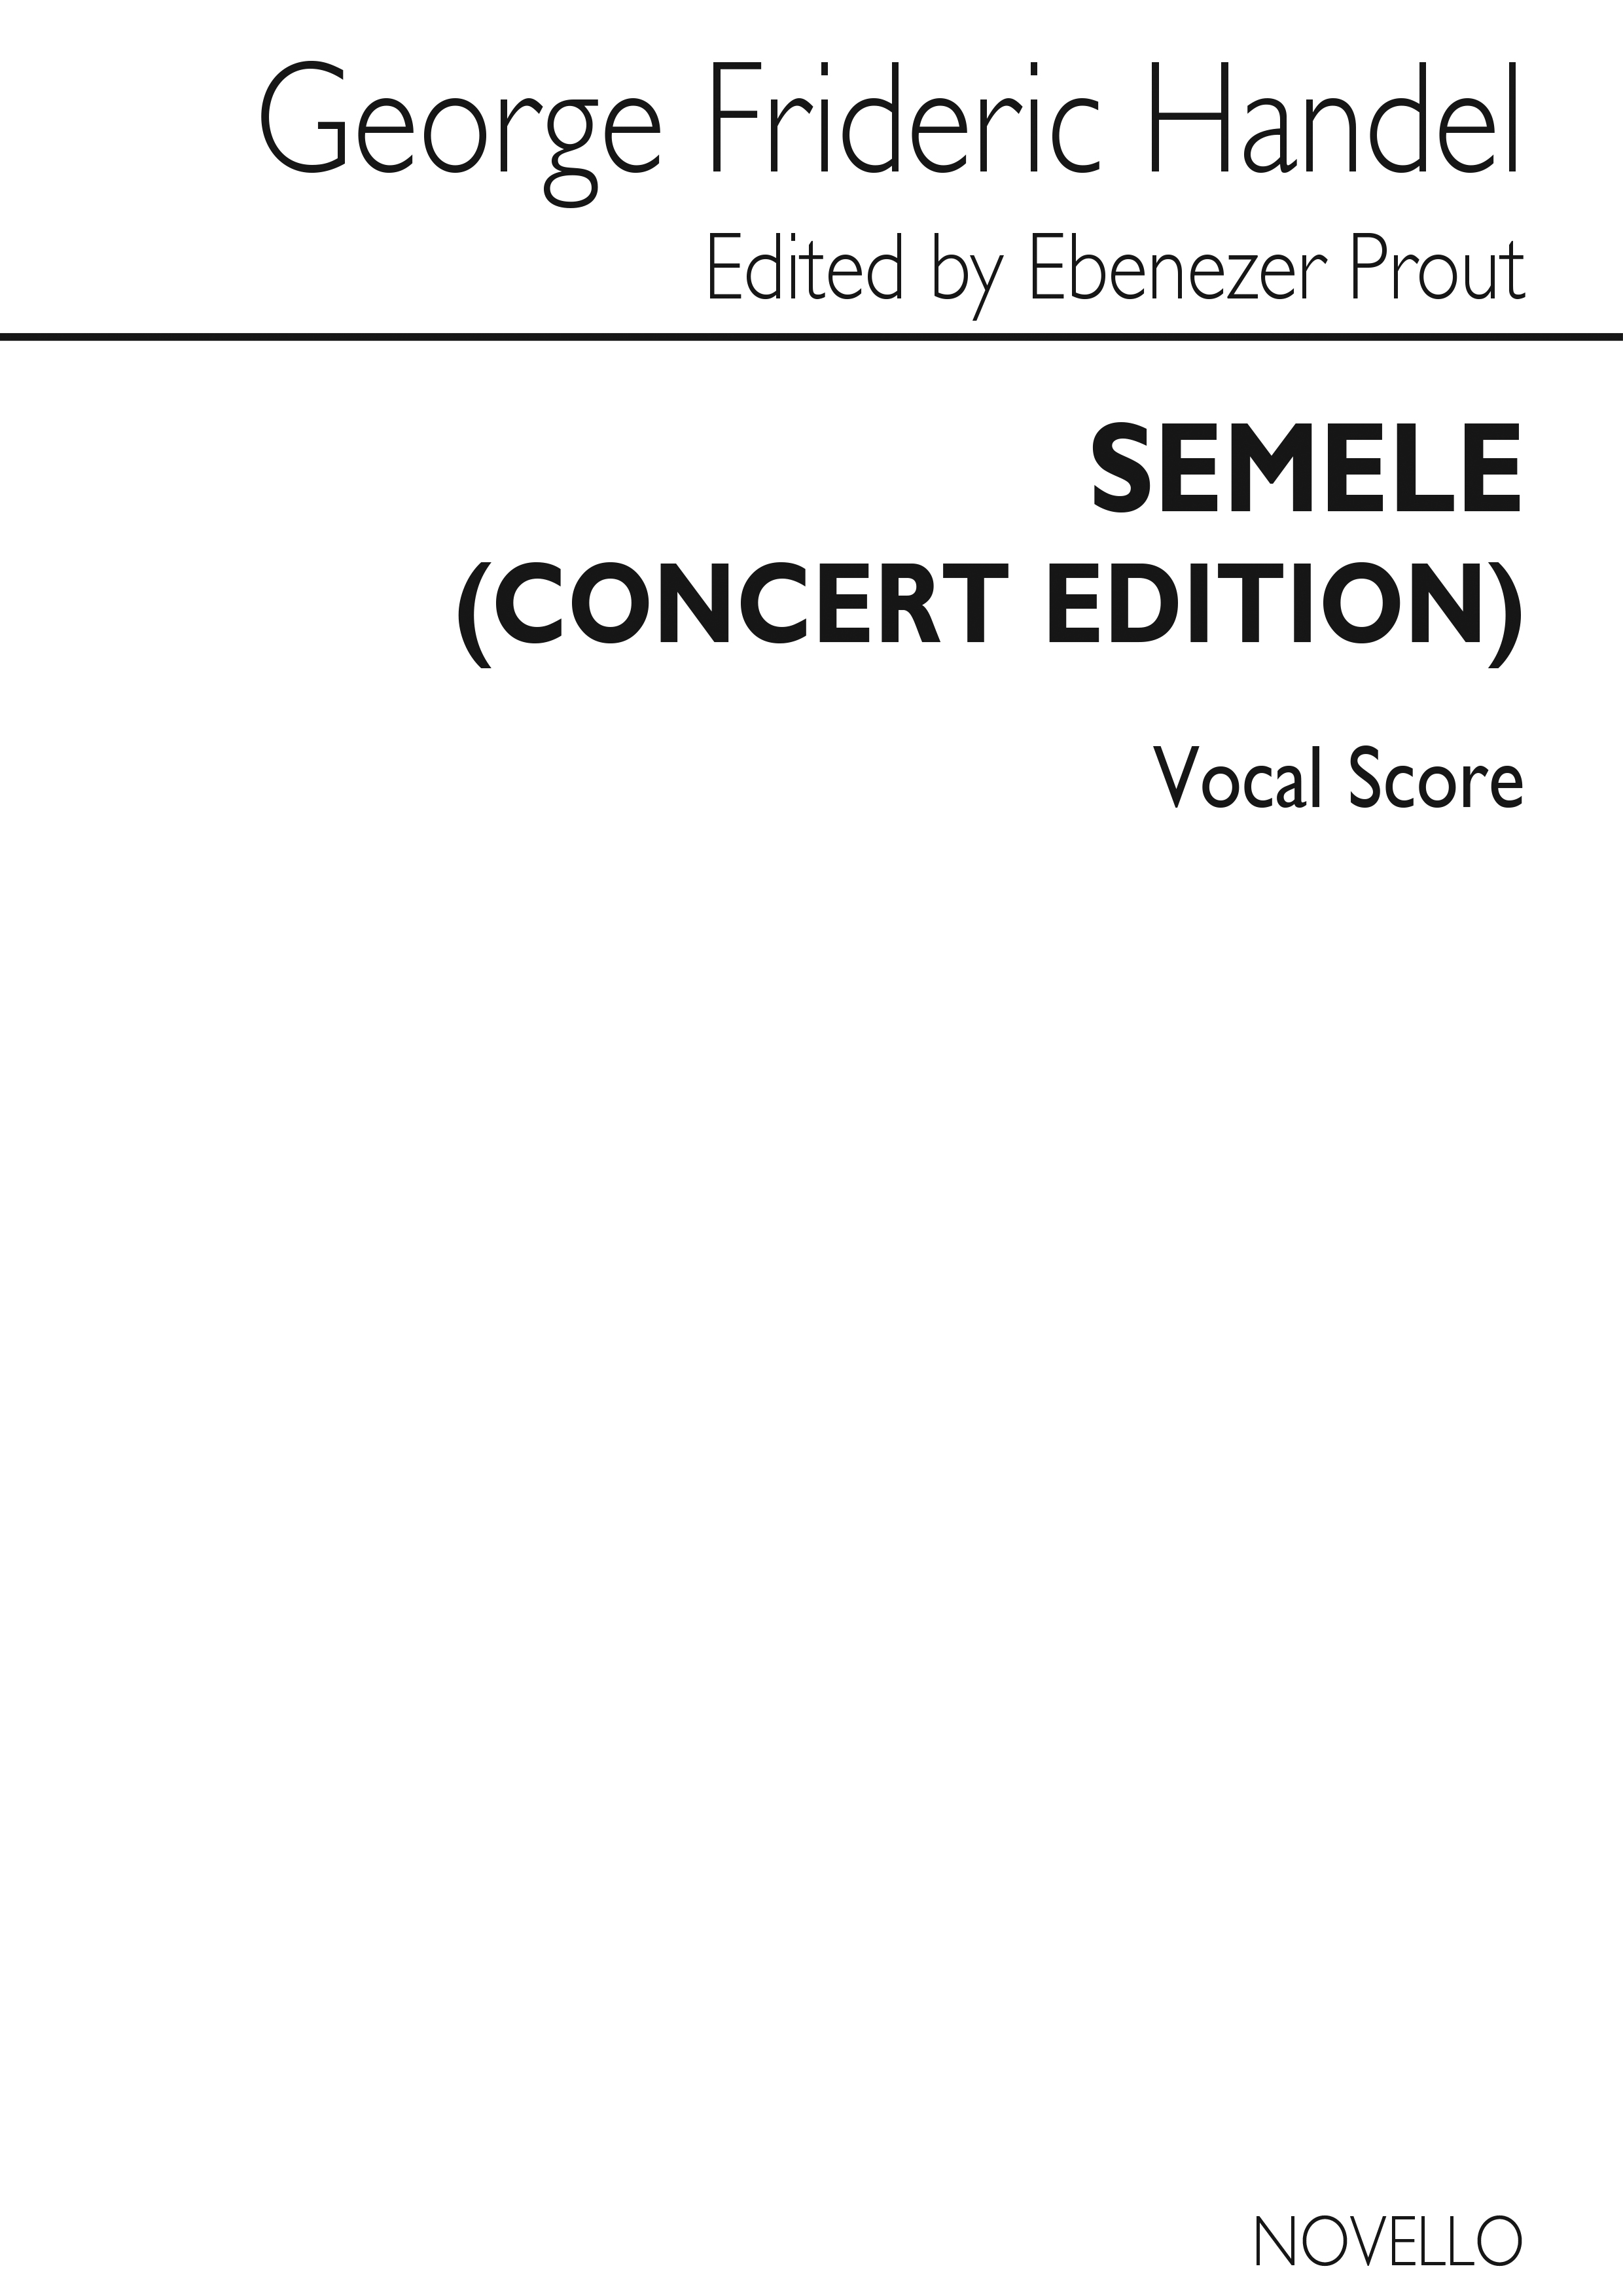 Georg Friedrich Hndel: Semele (Abridged Edition)- Vocal Score: SATB: Vocal